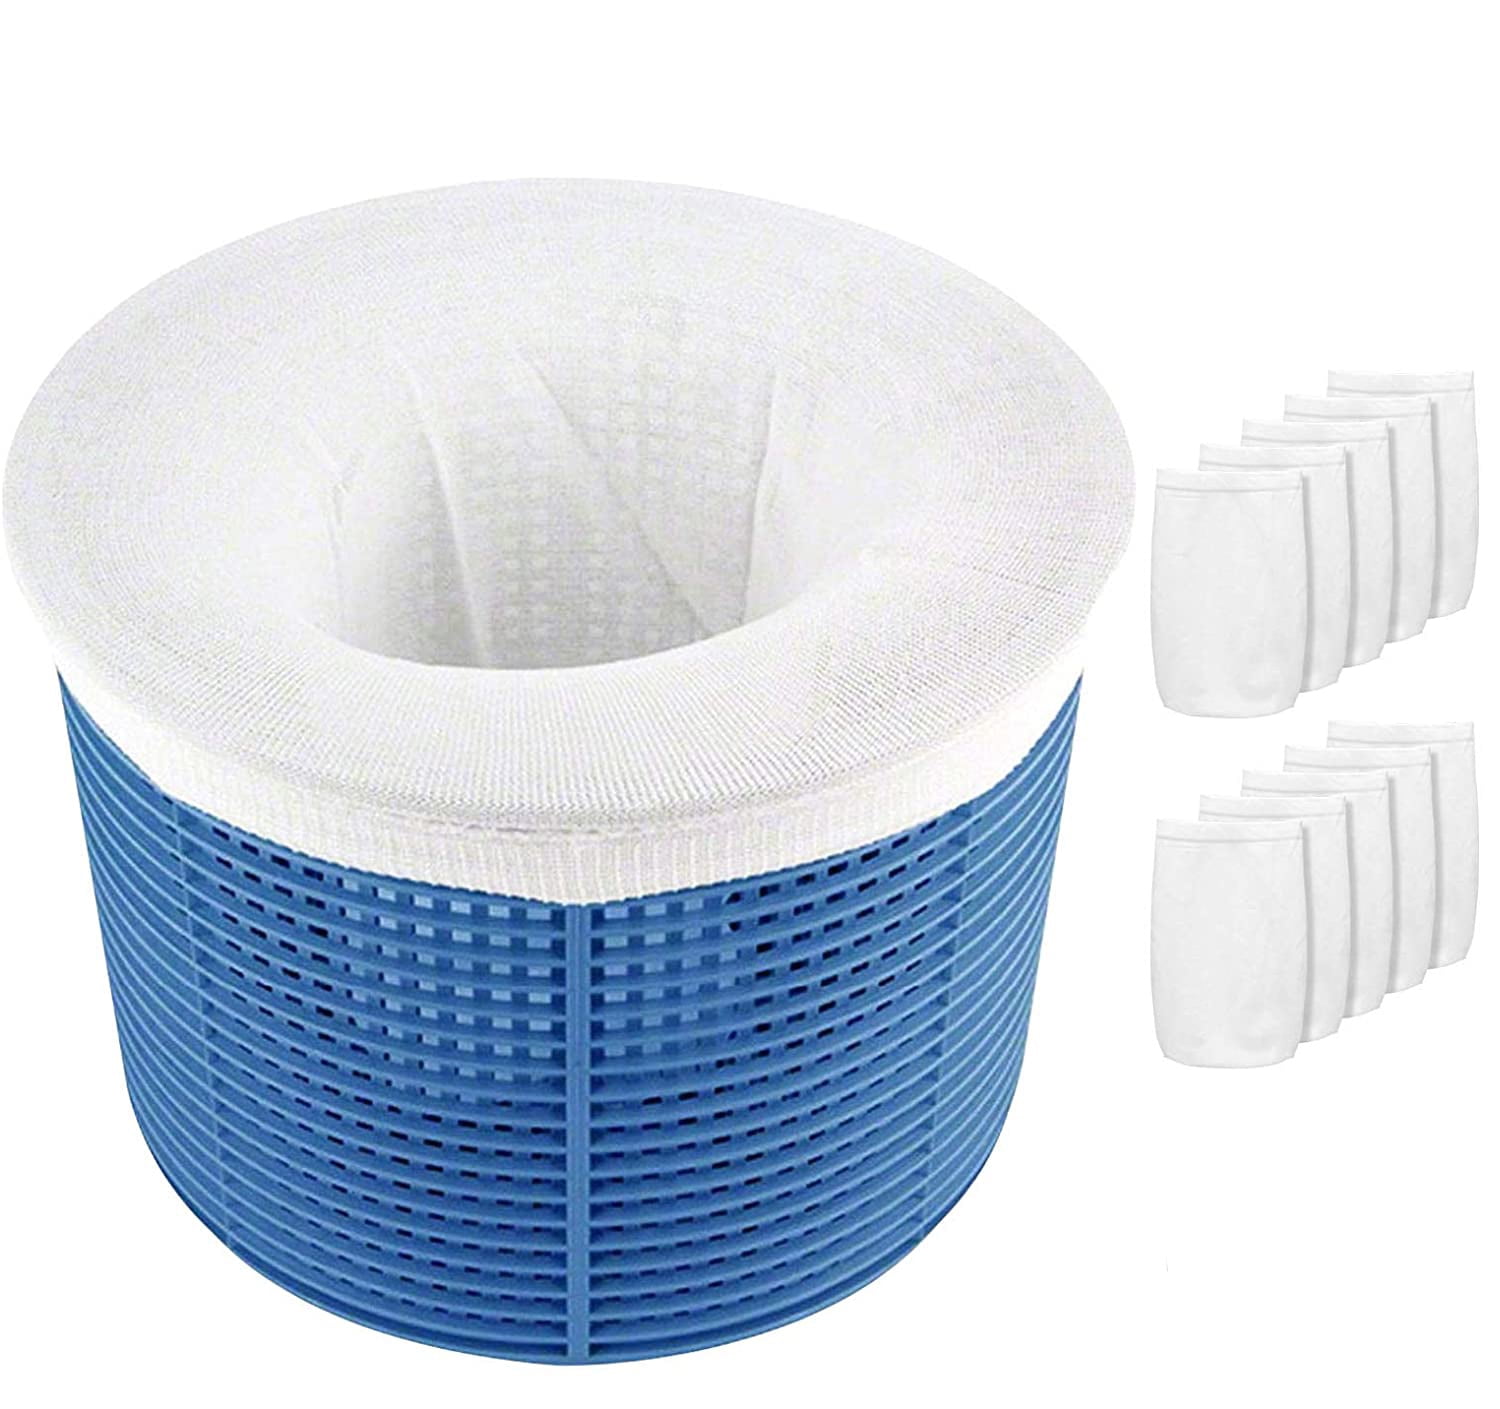 Stretch Pool Filter Sock Storage Saver Basket Net for Inground Above Ground Pool 